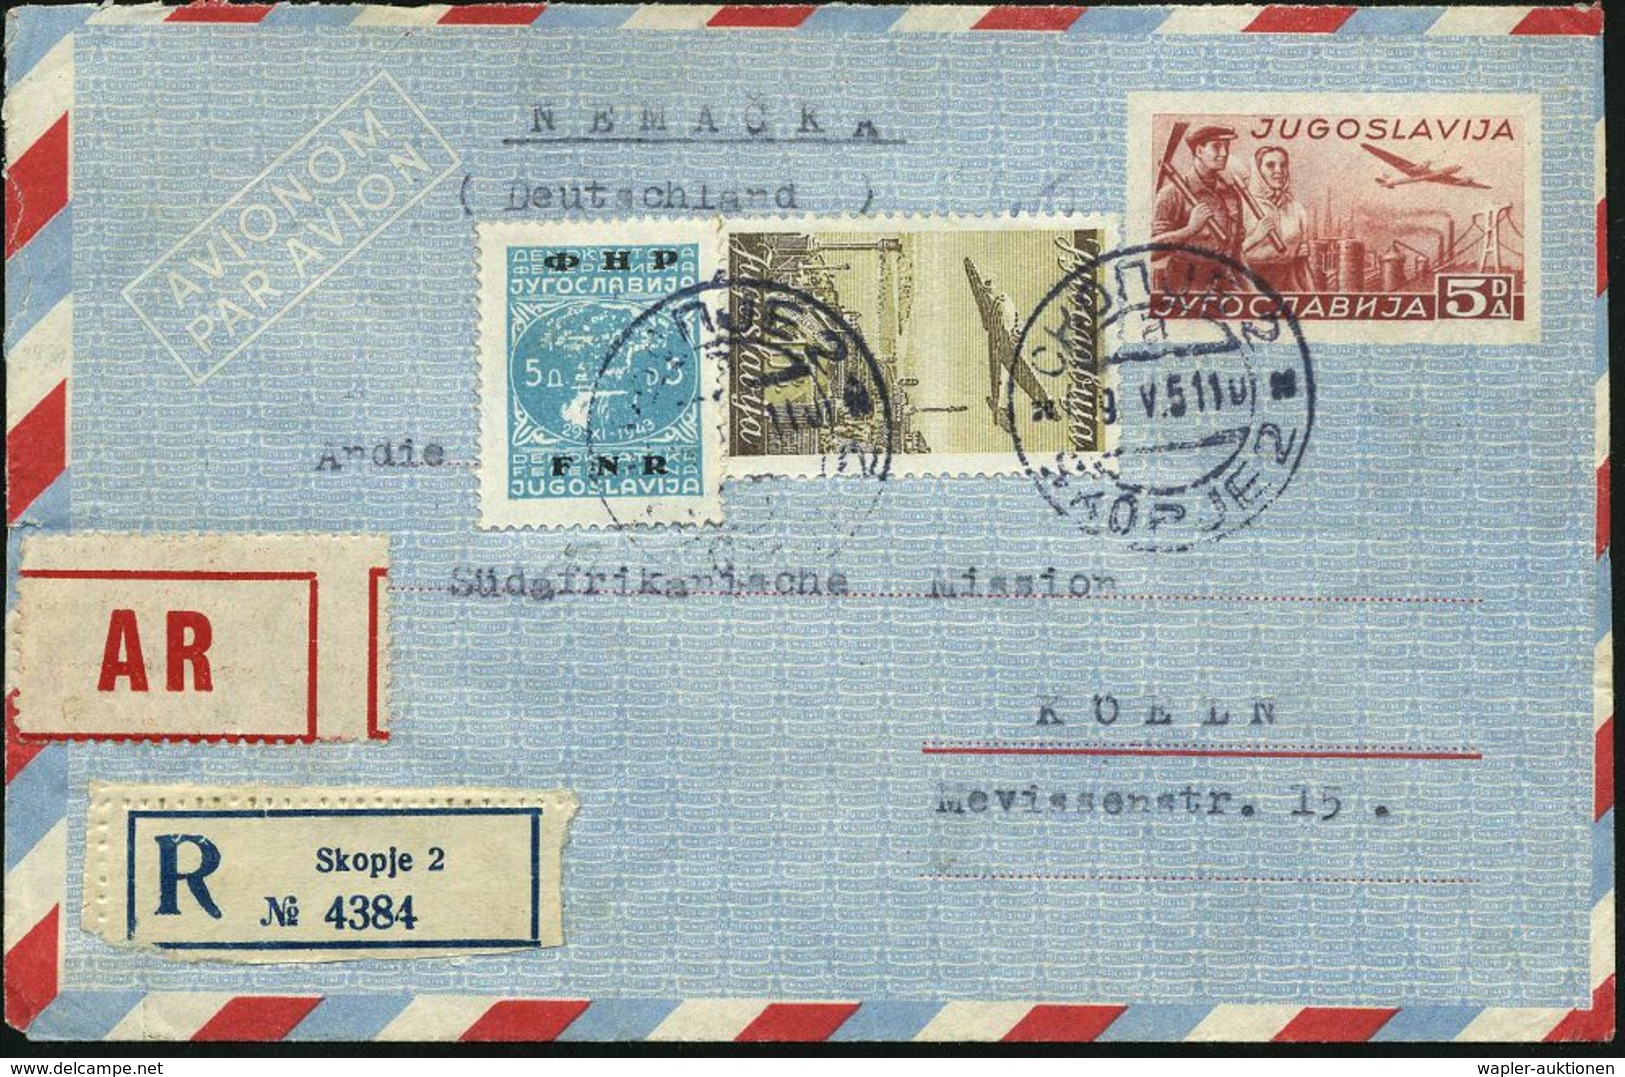 JUGOSLAWIEN 1951 Aerogramm 5 Din. Industrie, Rotbr., Zusatzfrankatur 10 Din.Flp. (Mi.519 U.a.) Bl. RZ: Skopje 2 + Roter  - Andere (Lucht)